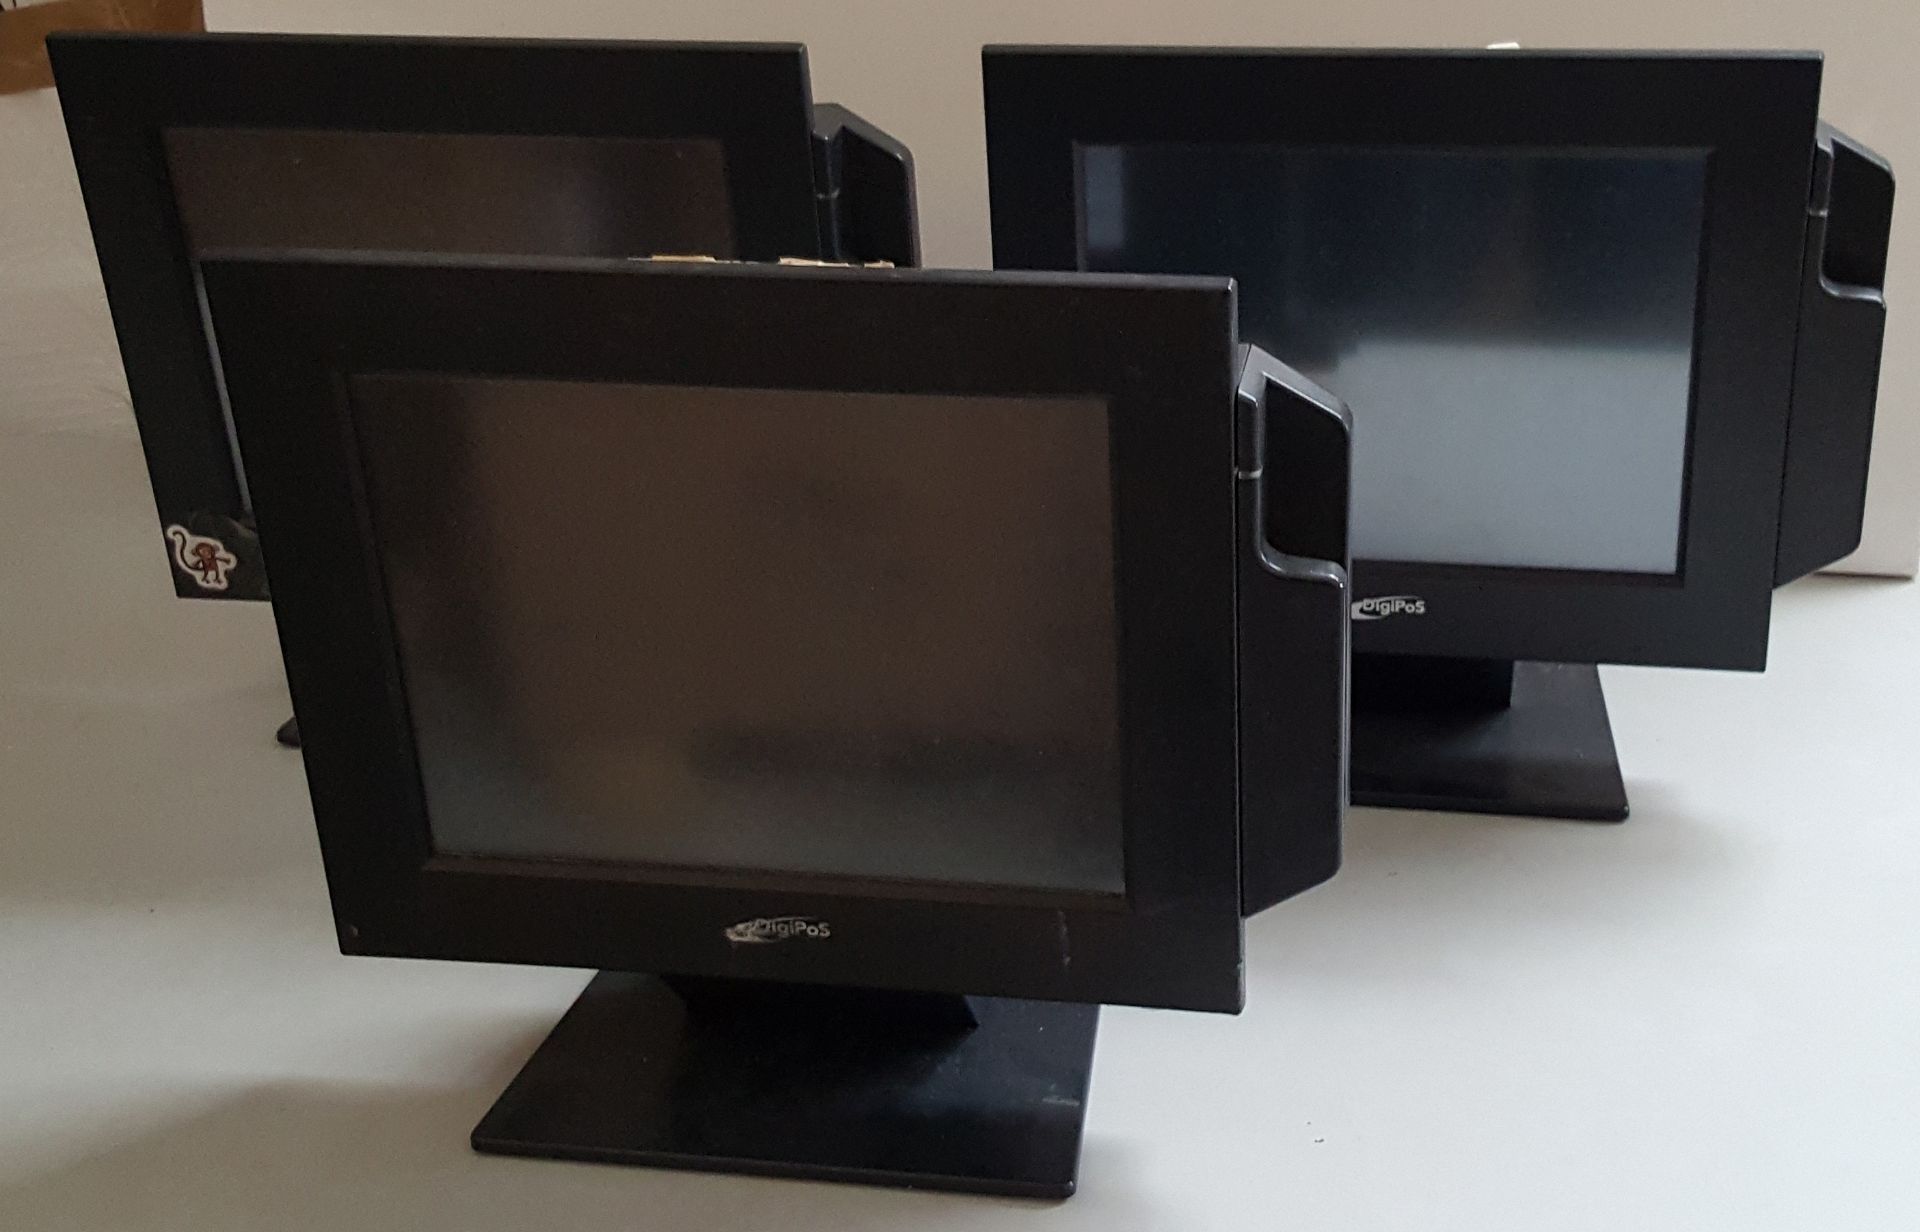 3 x Digipos 401 12" Display Touch Screen Monitor - Ref RC138 - CL011 - Location: Altrincham WA14